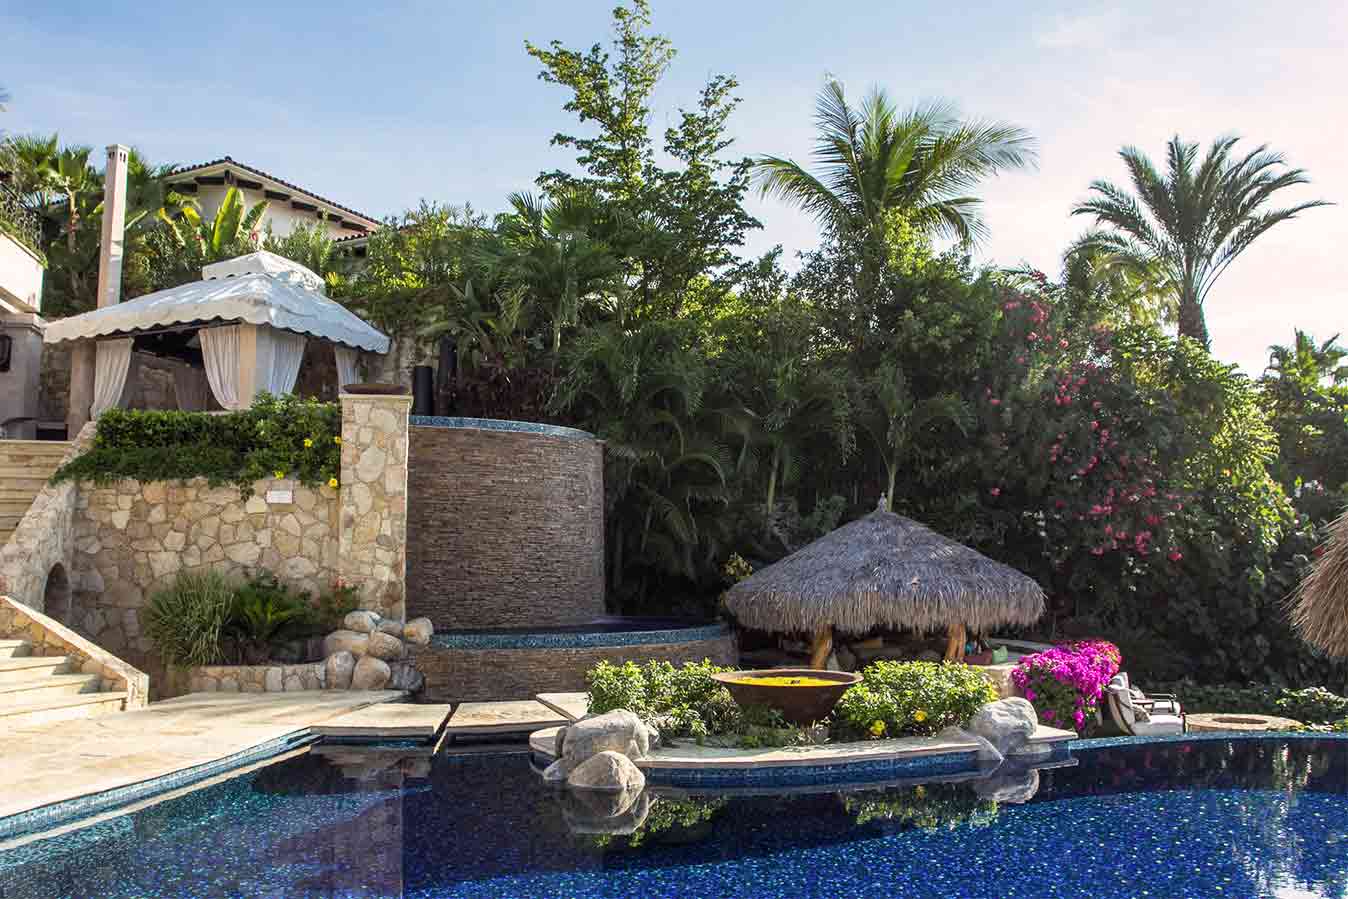 Pool Area at the Brisas Del Mar Vacation Home